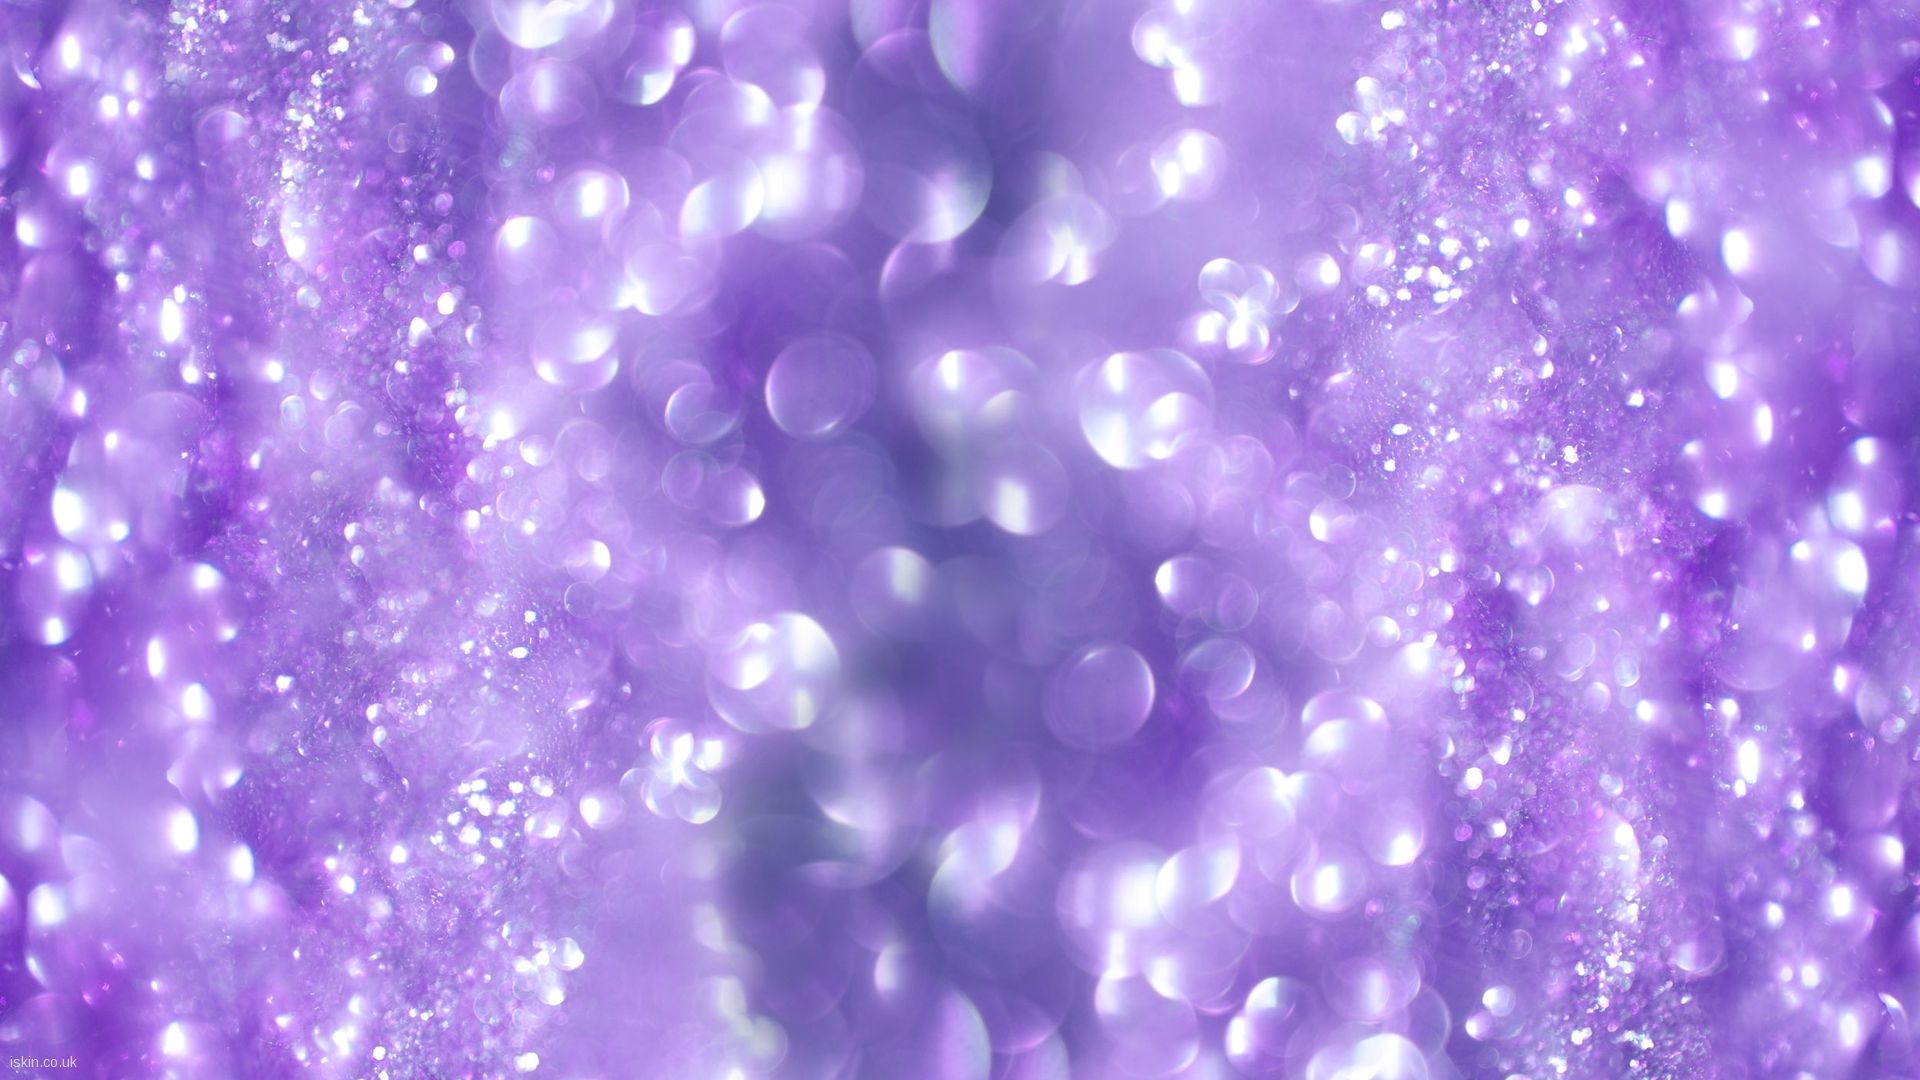 Glitter phone wallpaper purple sparkle  Sparkle wallpaper Glitter phone  wallpaper Glitter wallpaper